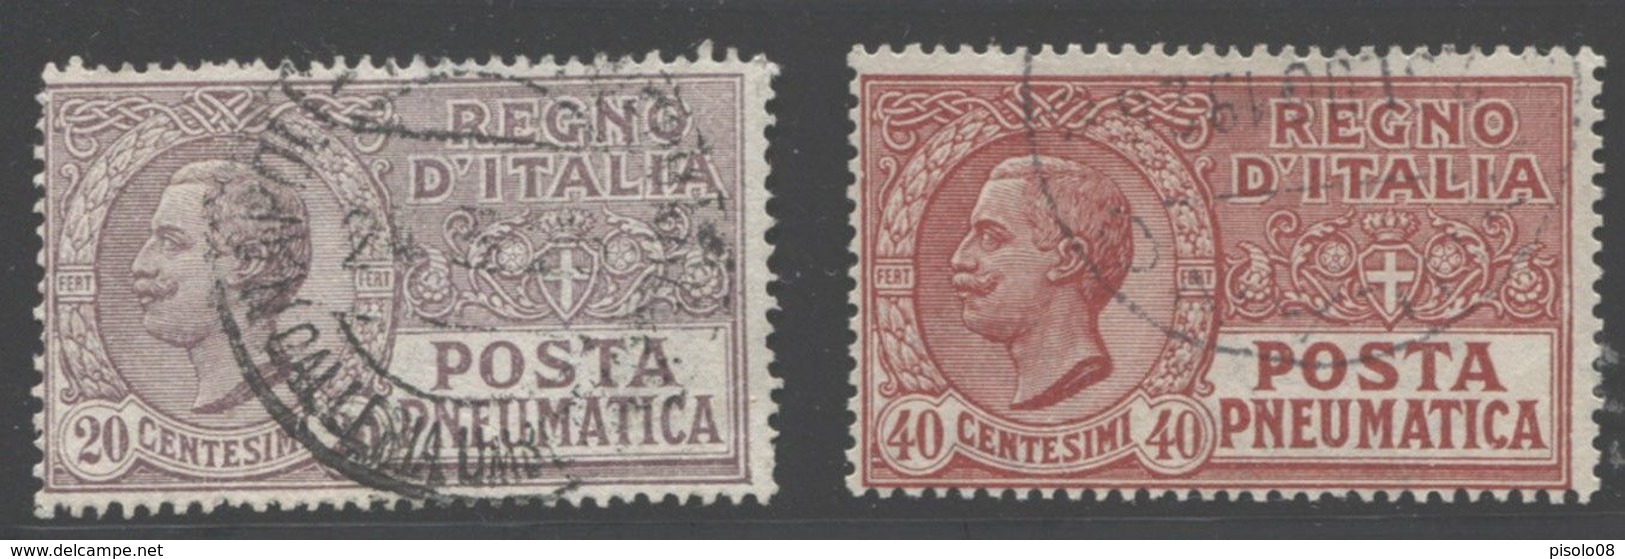 REGNO 1925  POSTA PNEUMATICA  USATA - Pneumatische Post